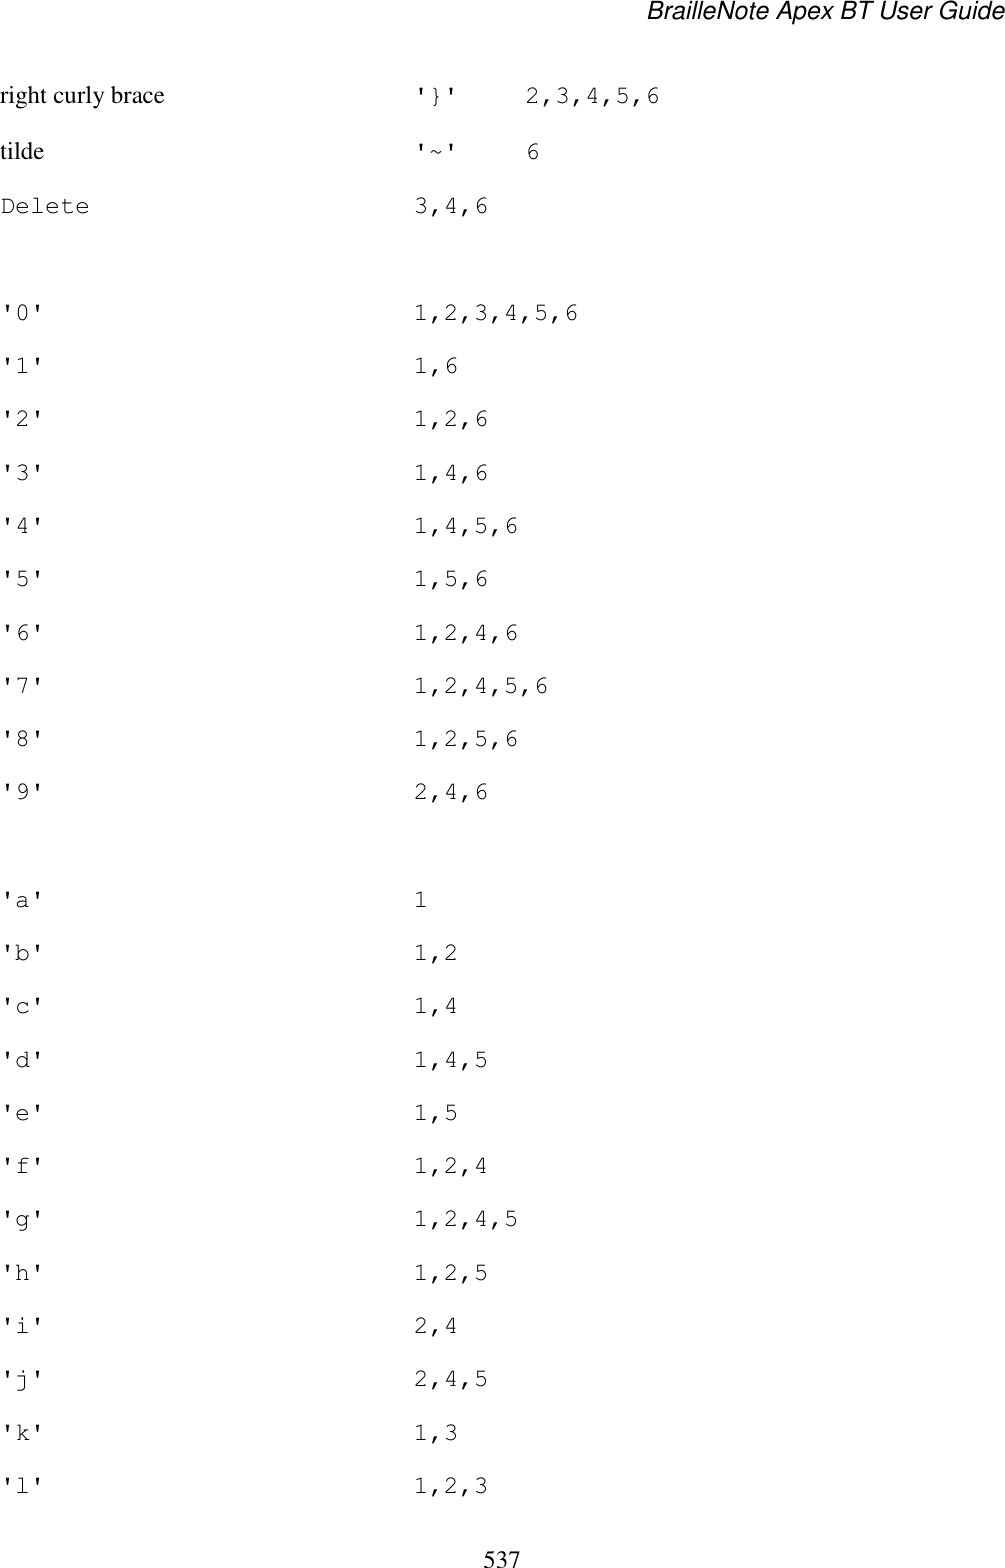 BrailleNote Apex BT User Guide   537  right curly brace  &apos;}&apos;  2,3,4,5,6 tilde  &apos;~&apos;  6 Delete  3,4,6  &apos;0&apos;  1,2,3,4,5,6 &apos;1&apos;  1,6 &apos;2&apos;  1,2,6 &apos;3&apos;  1,4,6 &apos;4&apos;  1,4,5,6 &apos;5&apos;  1,5,6 &apos;6&apos;  1,2,4,6 &apos;7&apos;  1,2,4,5,6 &apos;8&apos;  1,2,5,6 &apos;9&apos;  2,4,6  &apos;a&apos;  1 &apos;b&apos;  1,2 &apos;c&apos;  1,4 &apos;d&apos;  1,4,5 &apos;e&apos;  1,5 &apos;f&apos;  1,2,4 &apos;g&apos;  1,2,4,5 &apos;h&apos;  1,2,5 &apos;i&apos;  2,4 &apos;j&apos;  2,4,5 &apos;k&apos;  1,3 &apos;l&apos;  1,2,3 